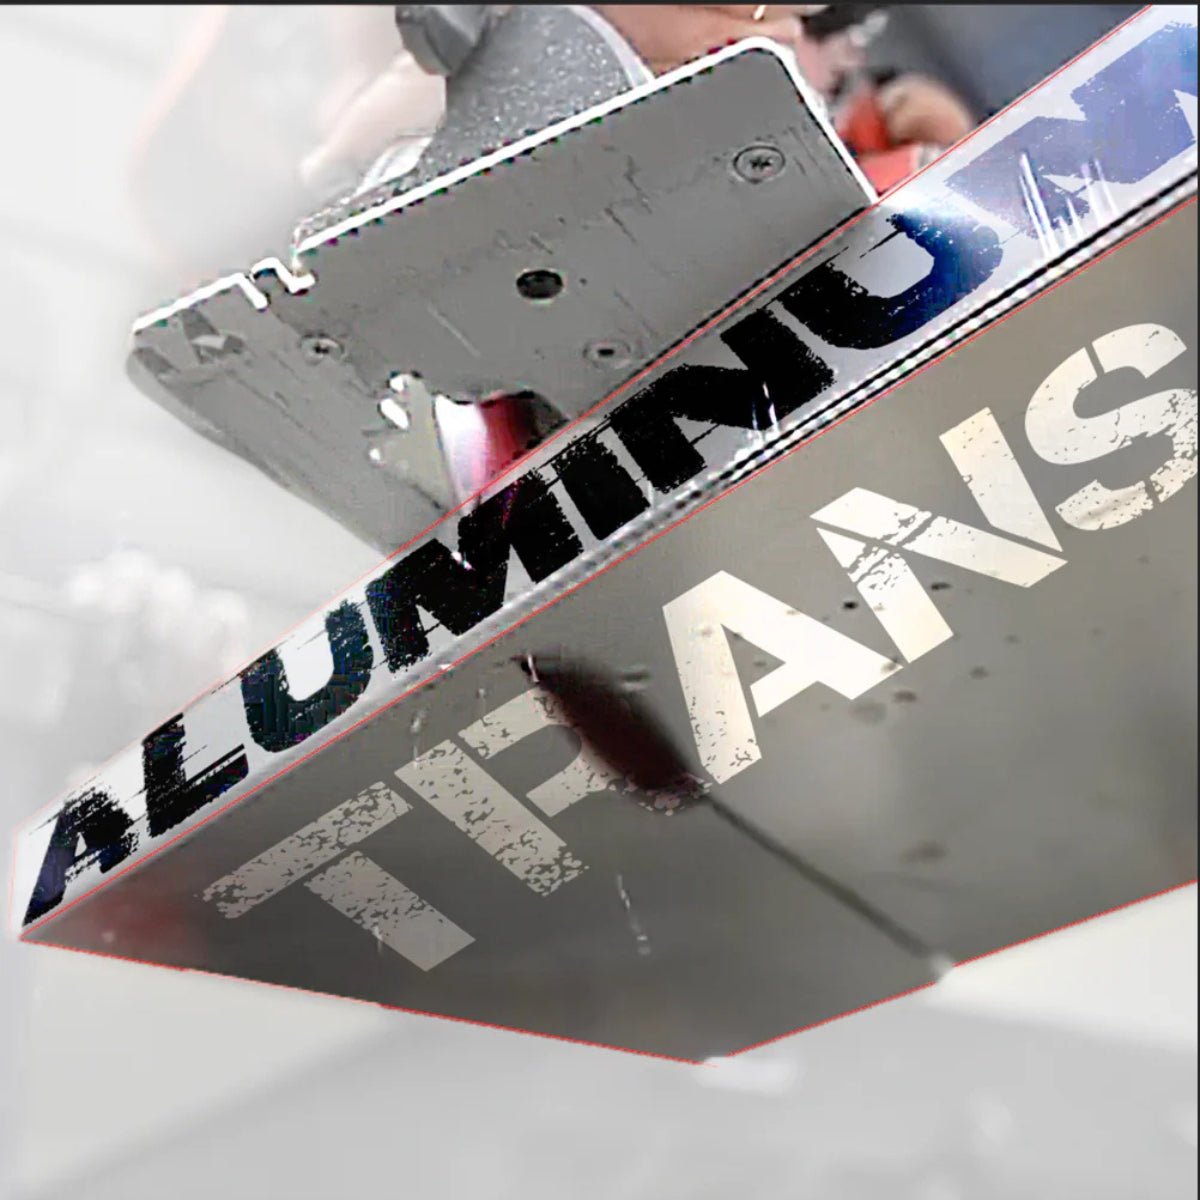 Aluminum Transom Replacement Kit